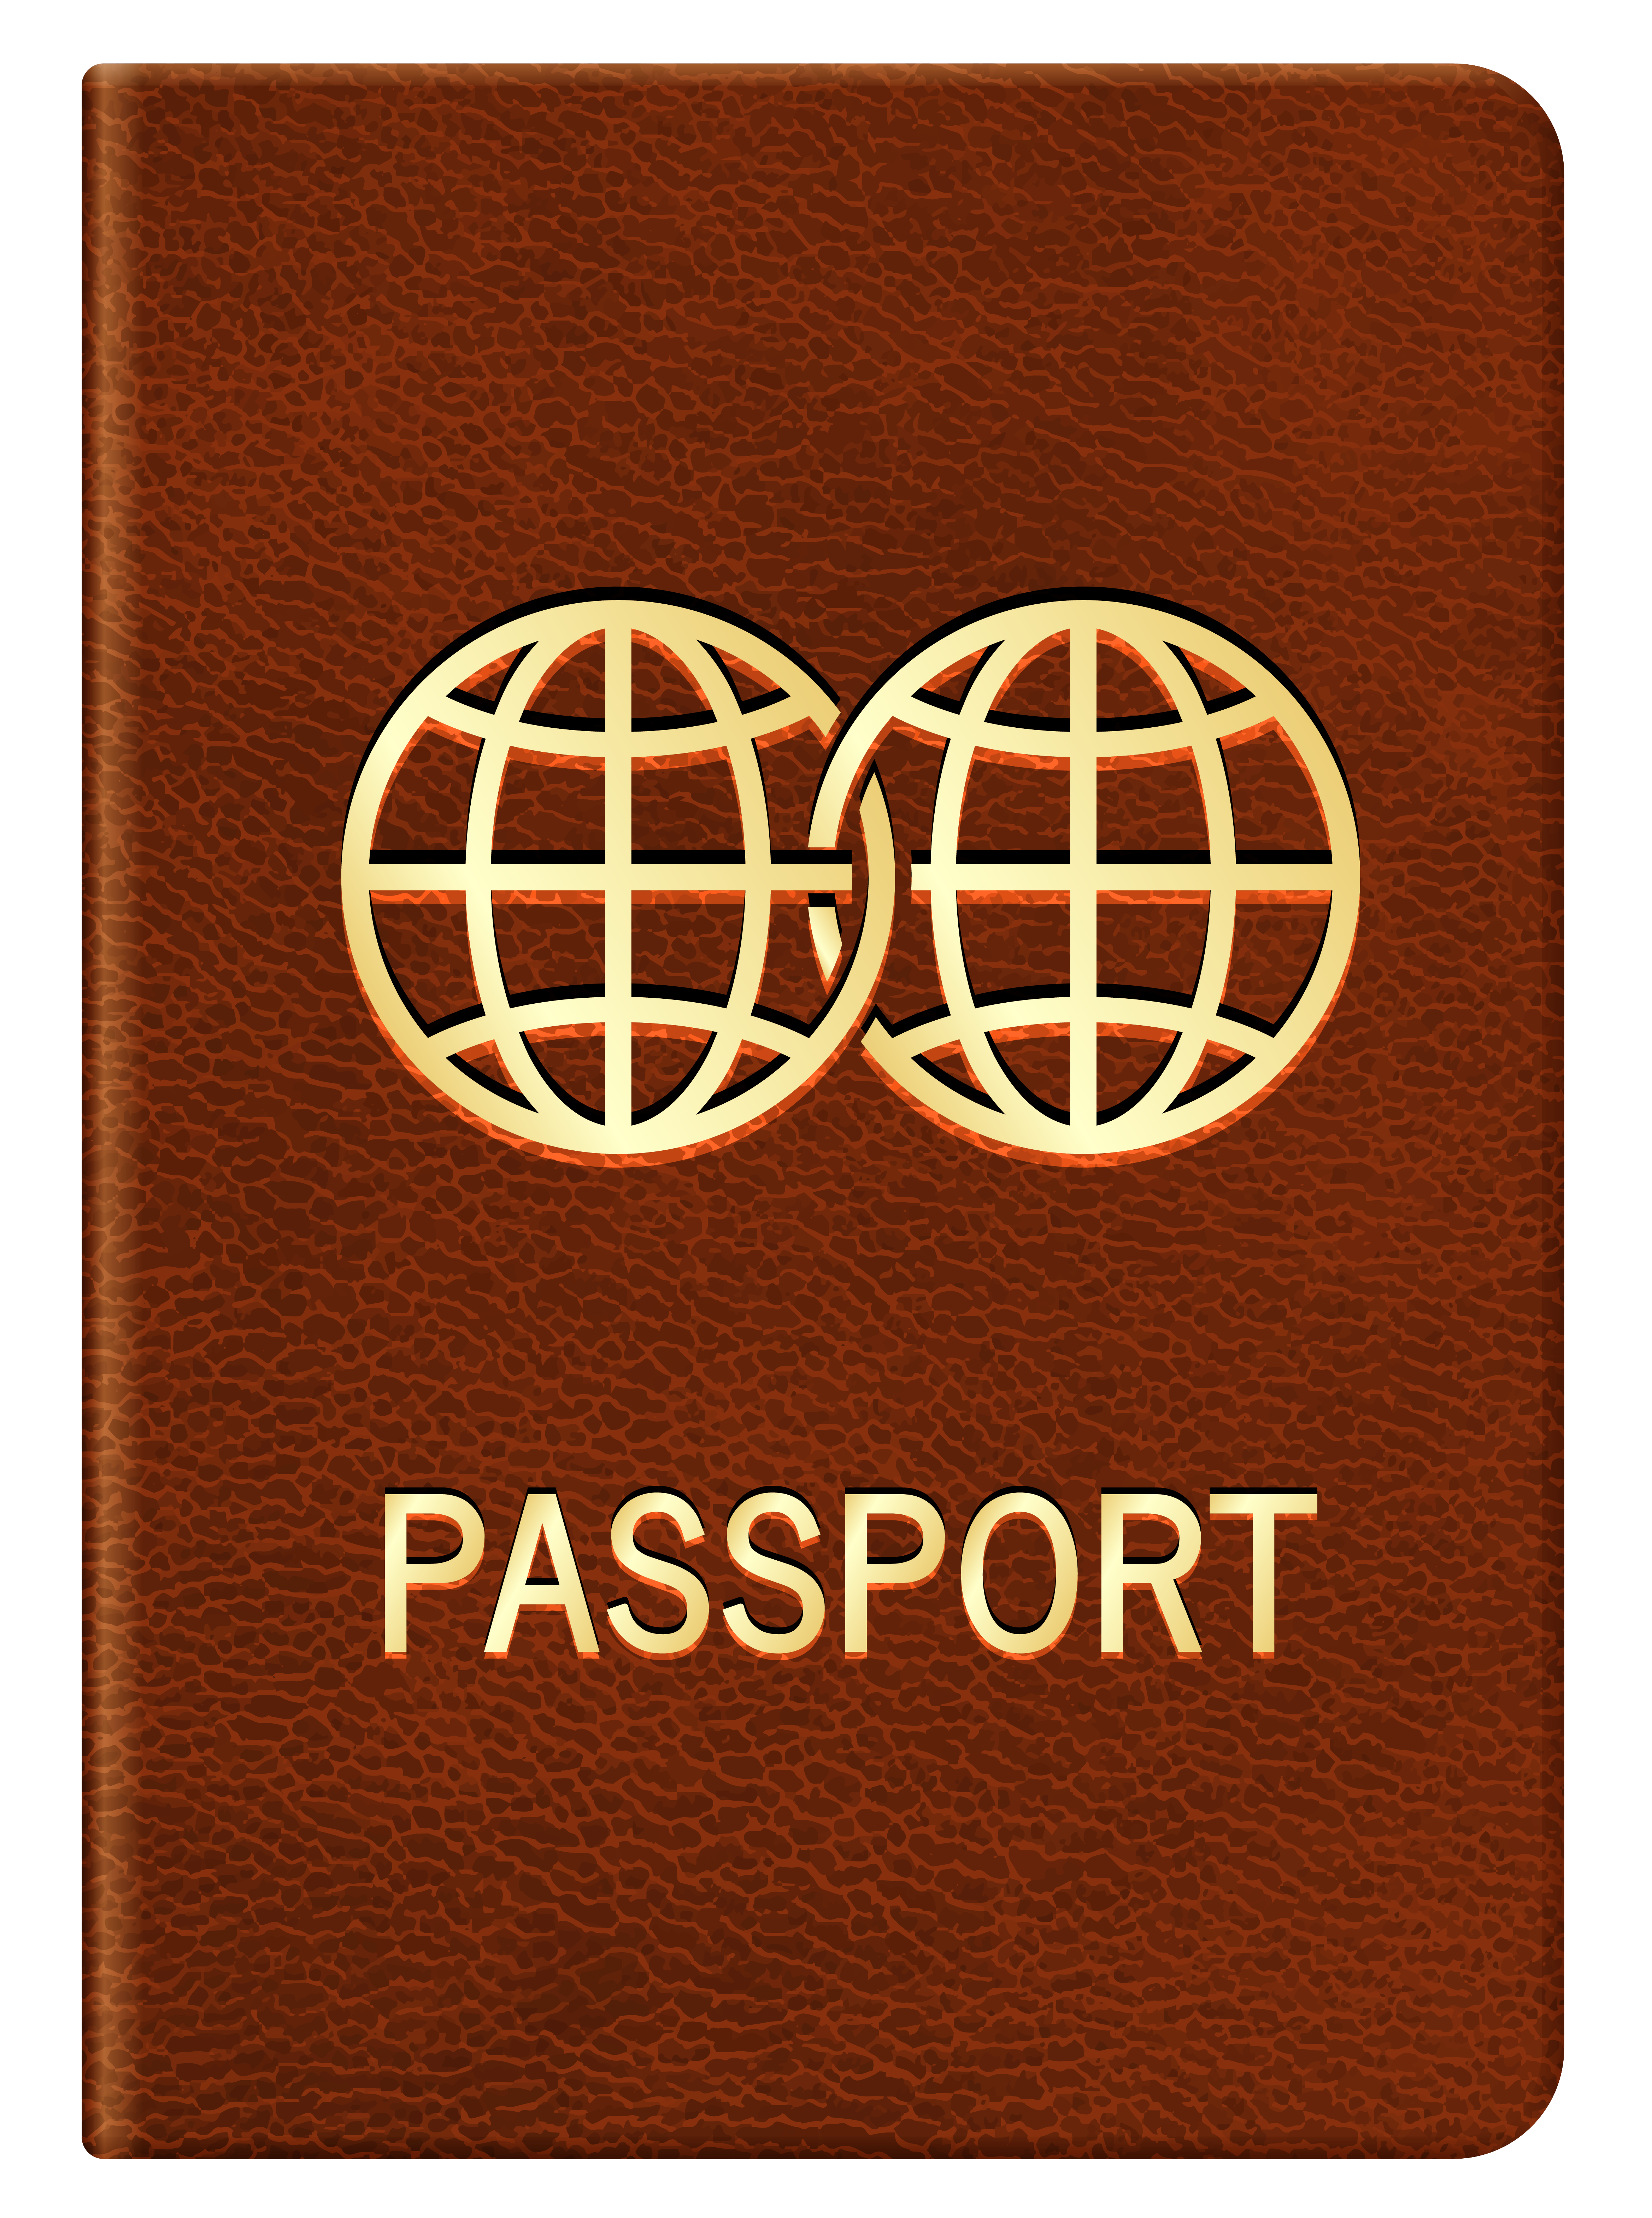 Passport clipart free.